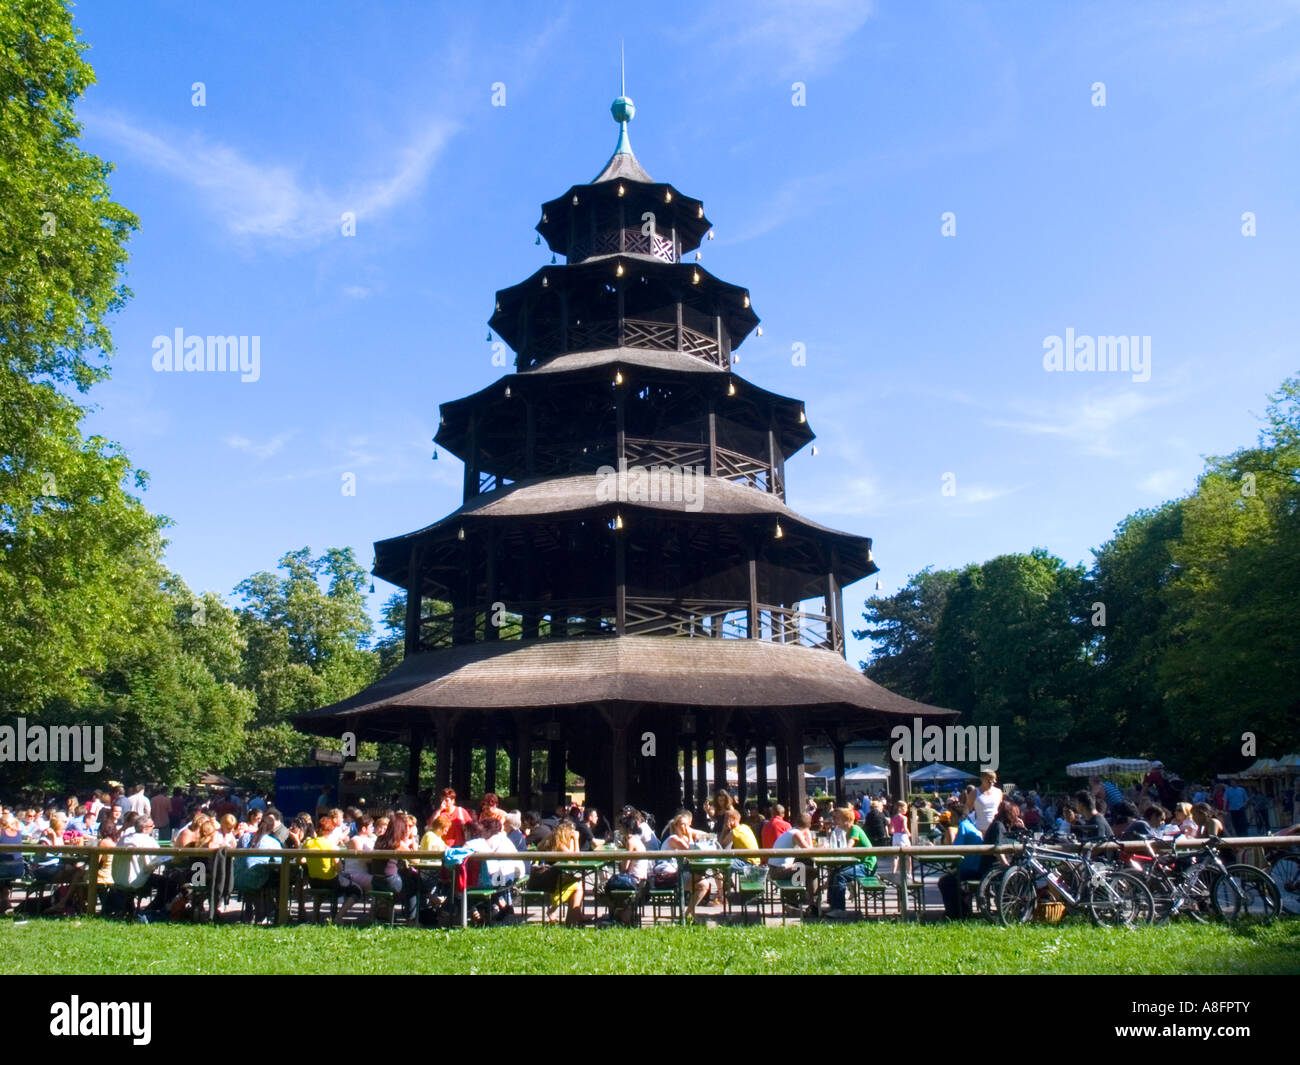 People enjoy beer in beer garden chinese tower English garden munich bavaria germany Stock Photo